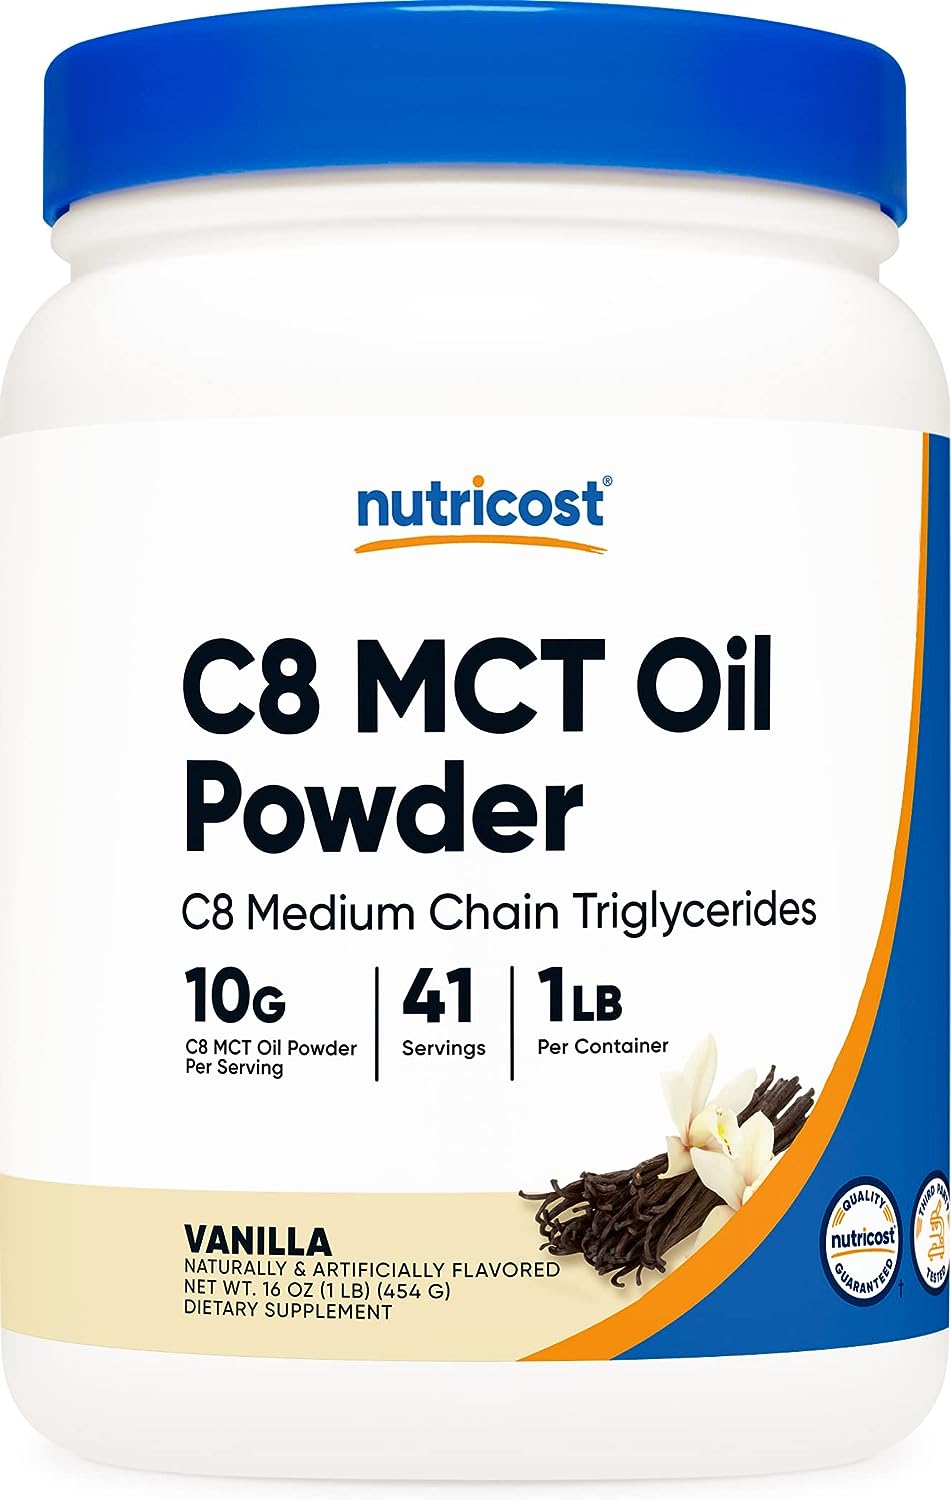 Nutricost C8 MCT Oil Powder 1 (16) Vanilla avor - 95% C8 MCT Oil Powder, Best for Keto Diets, Non-GMO, Gluten Free